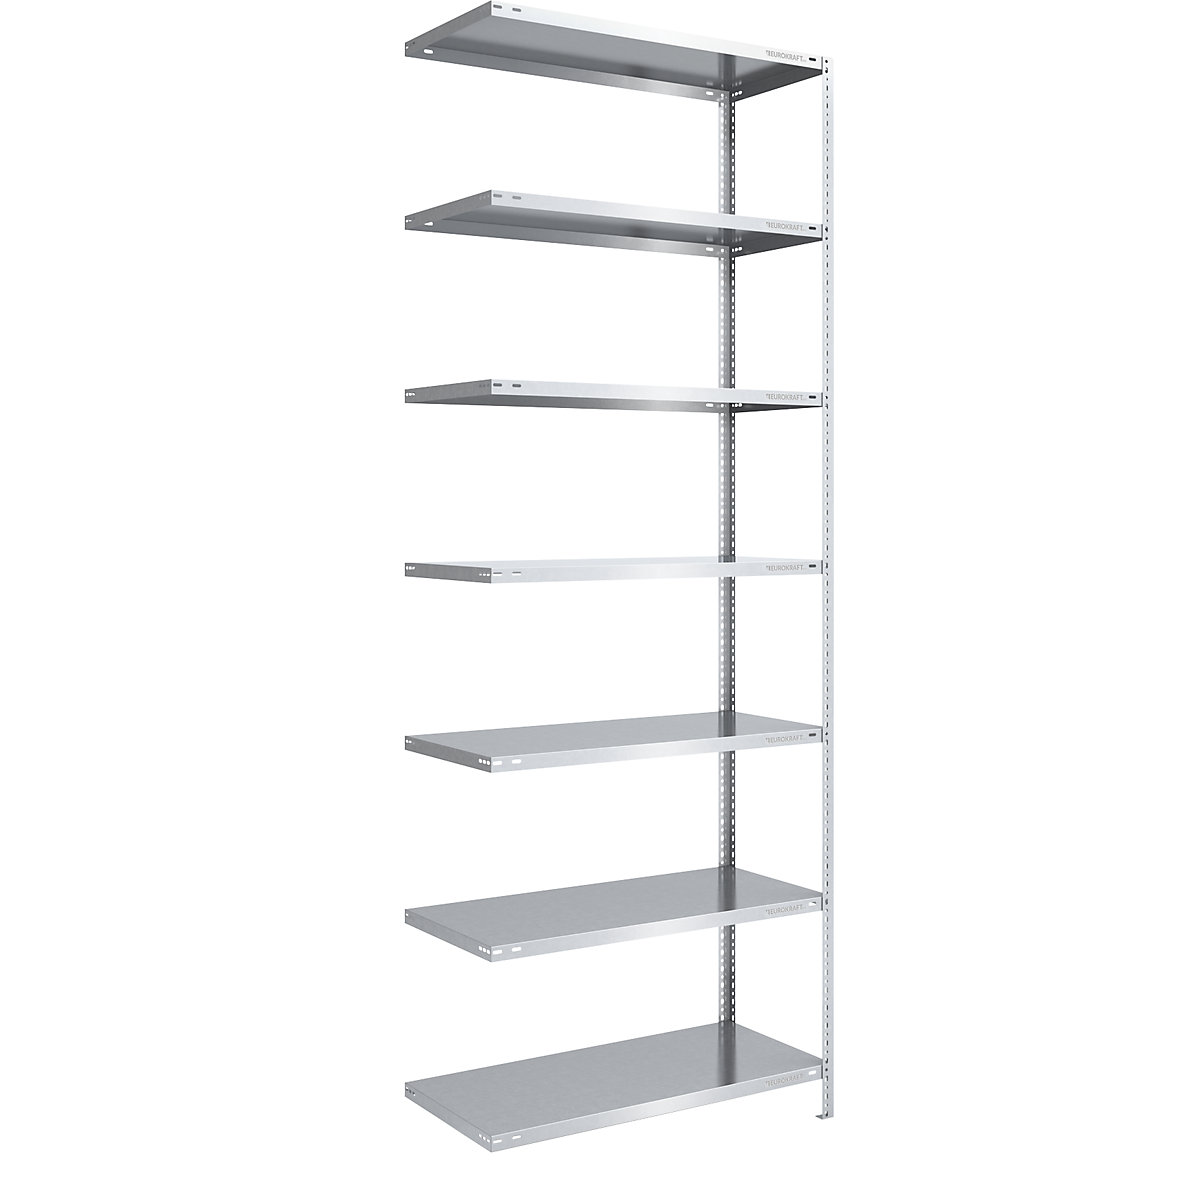 Bolt-together shelf unit, light duty, zinc plated – eurokraft pro, shelf unit height 3000 mm, shelf width 1000 mm, depth 600 mm, extension shelf unit-9